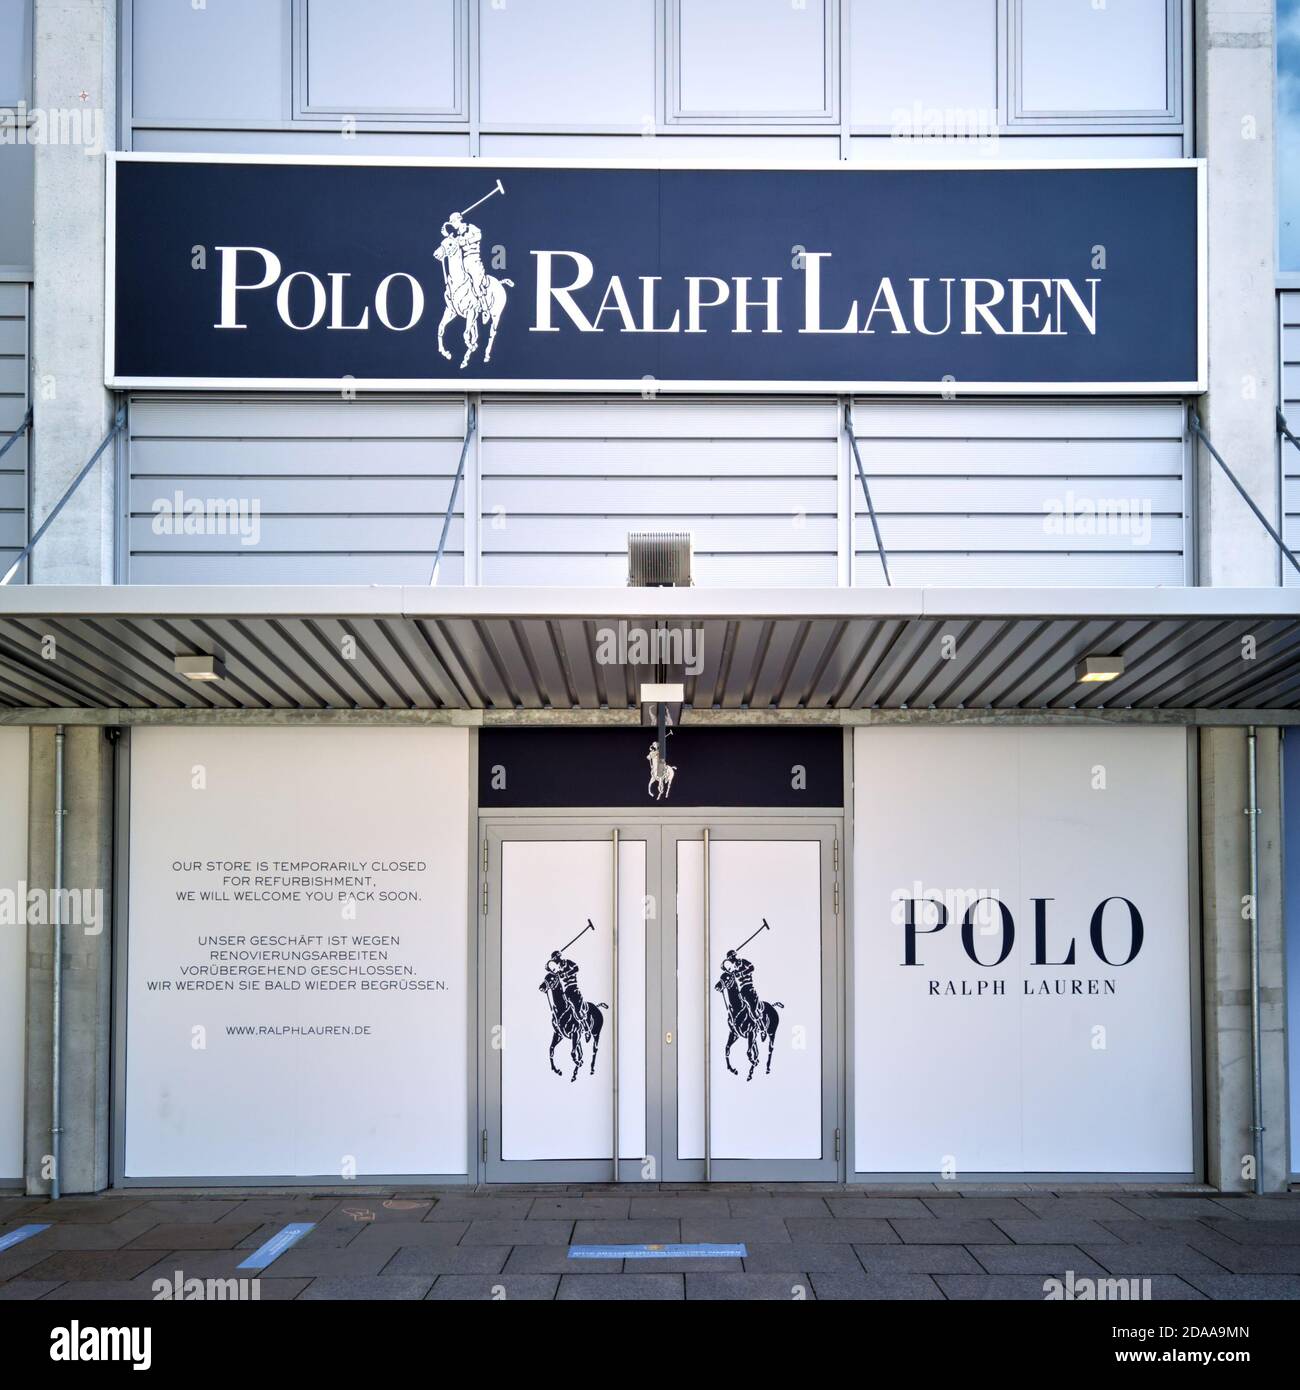 Polo Ralph Lauren, Outlet